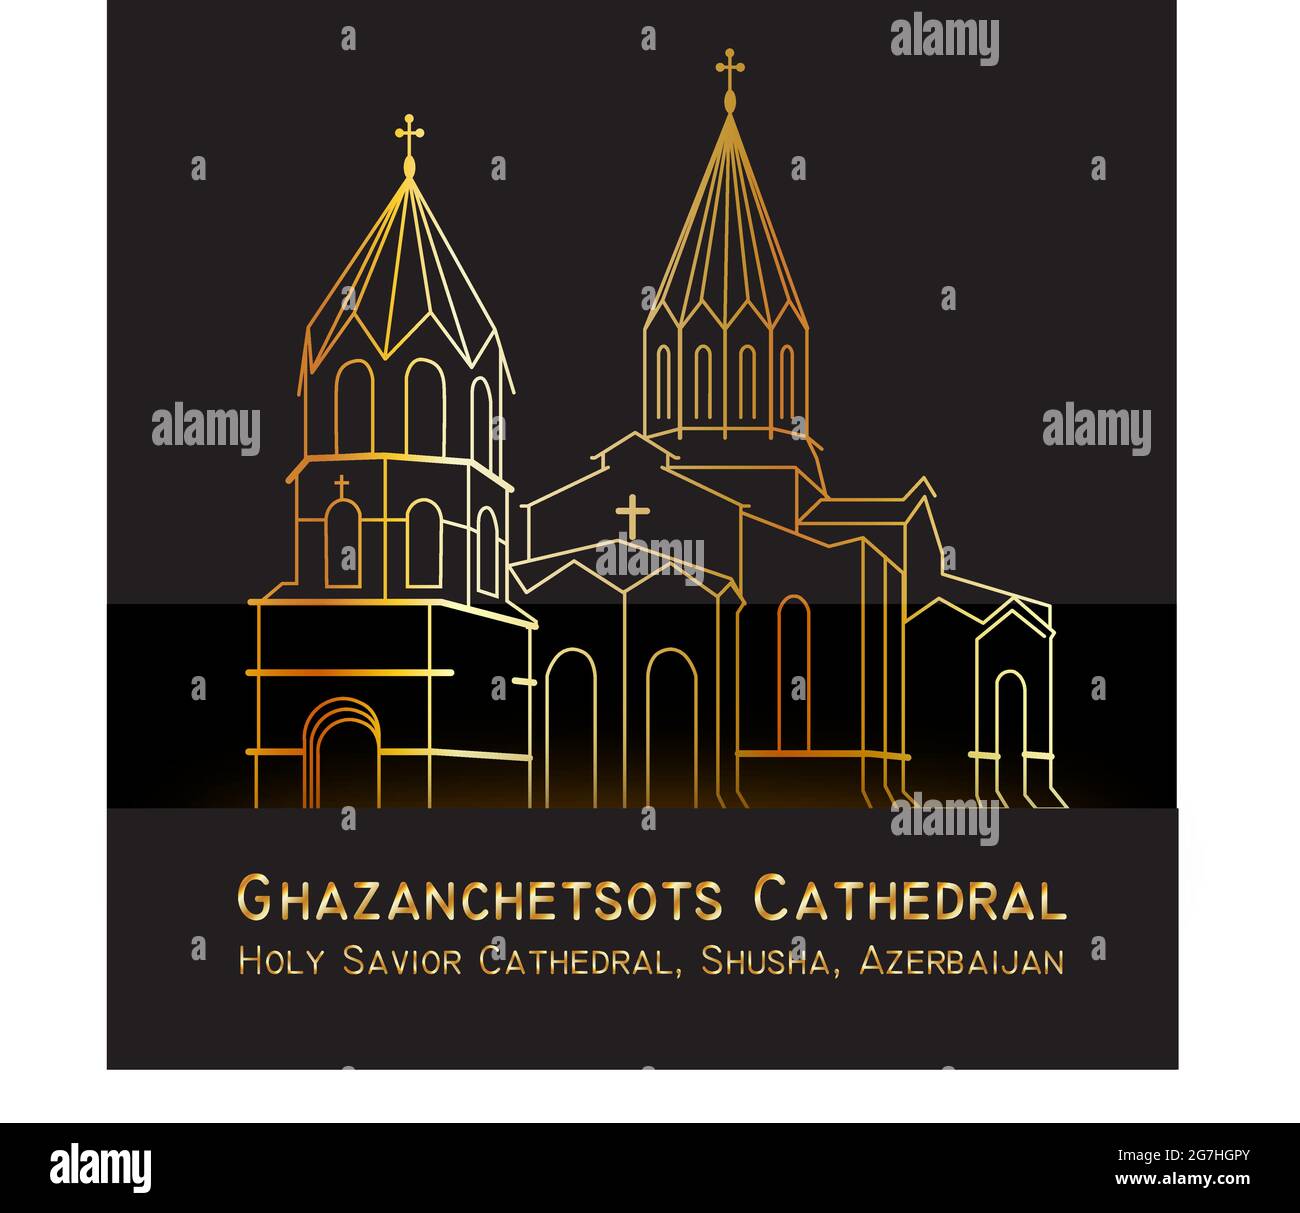 Holy Armenian ghazanchetsots Cathedral in Azerbaijan cultural town Landmark icon Stock Vector